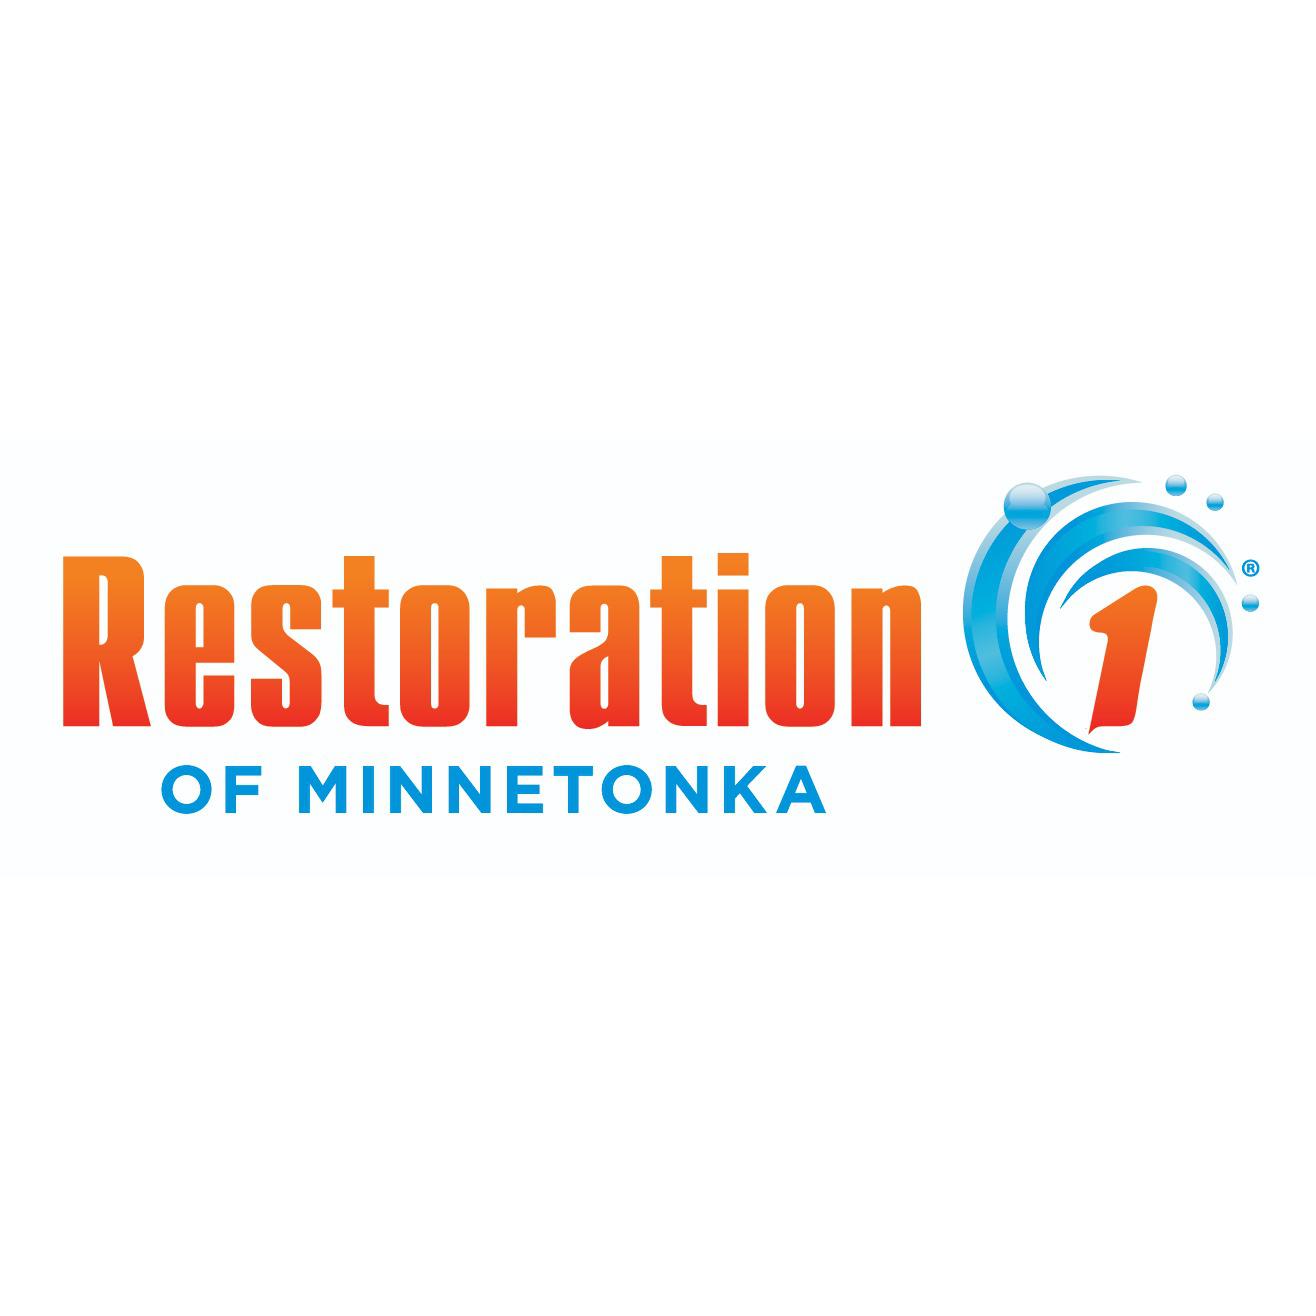 Restoration 1 of Minnetonka